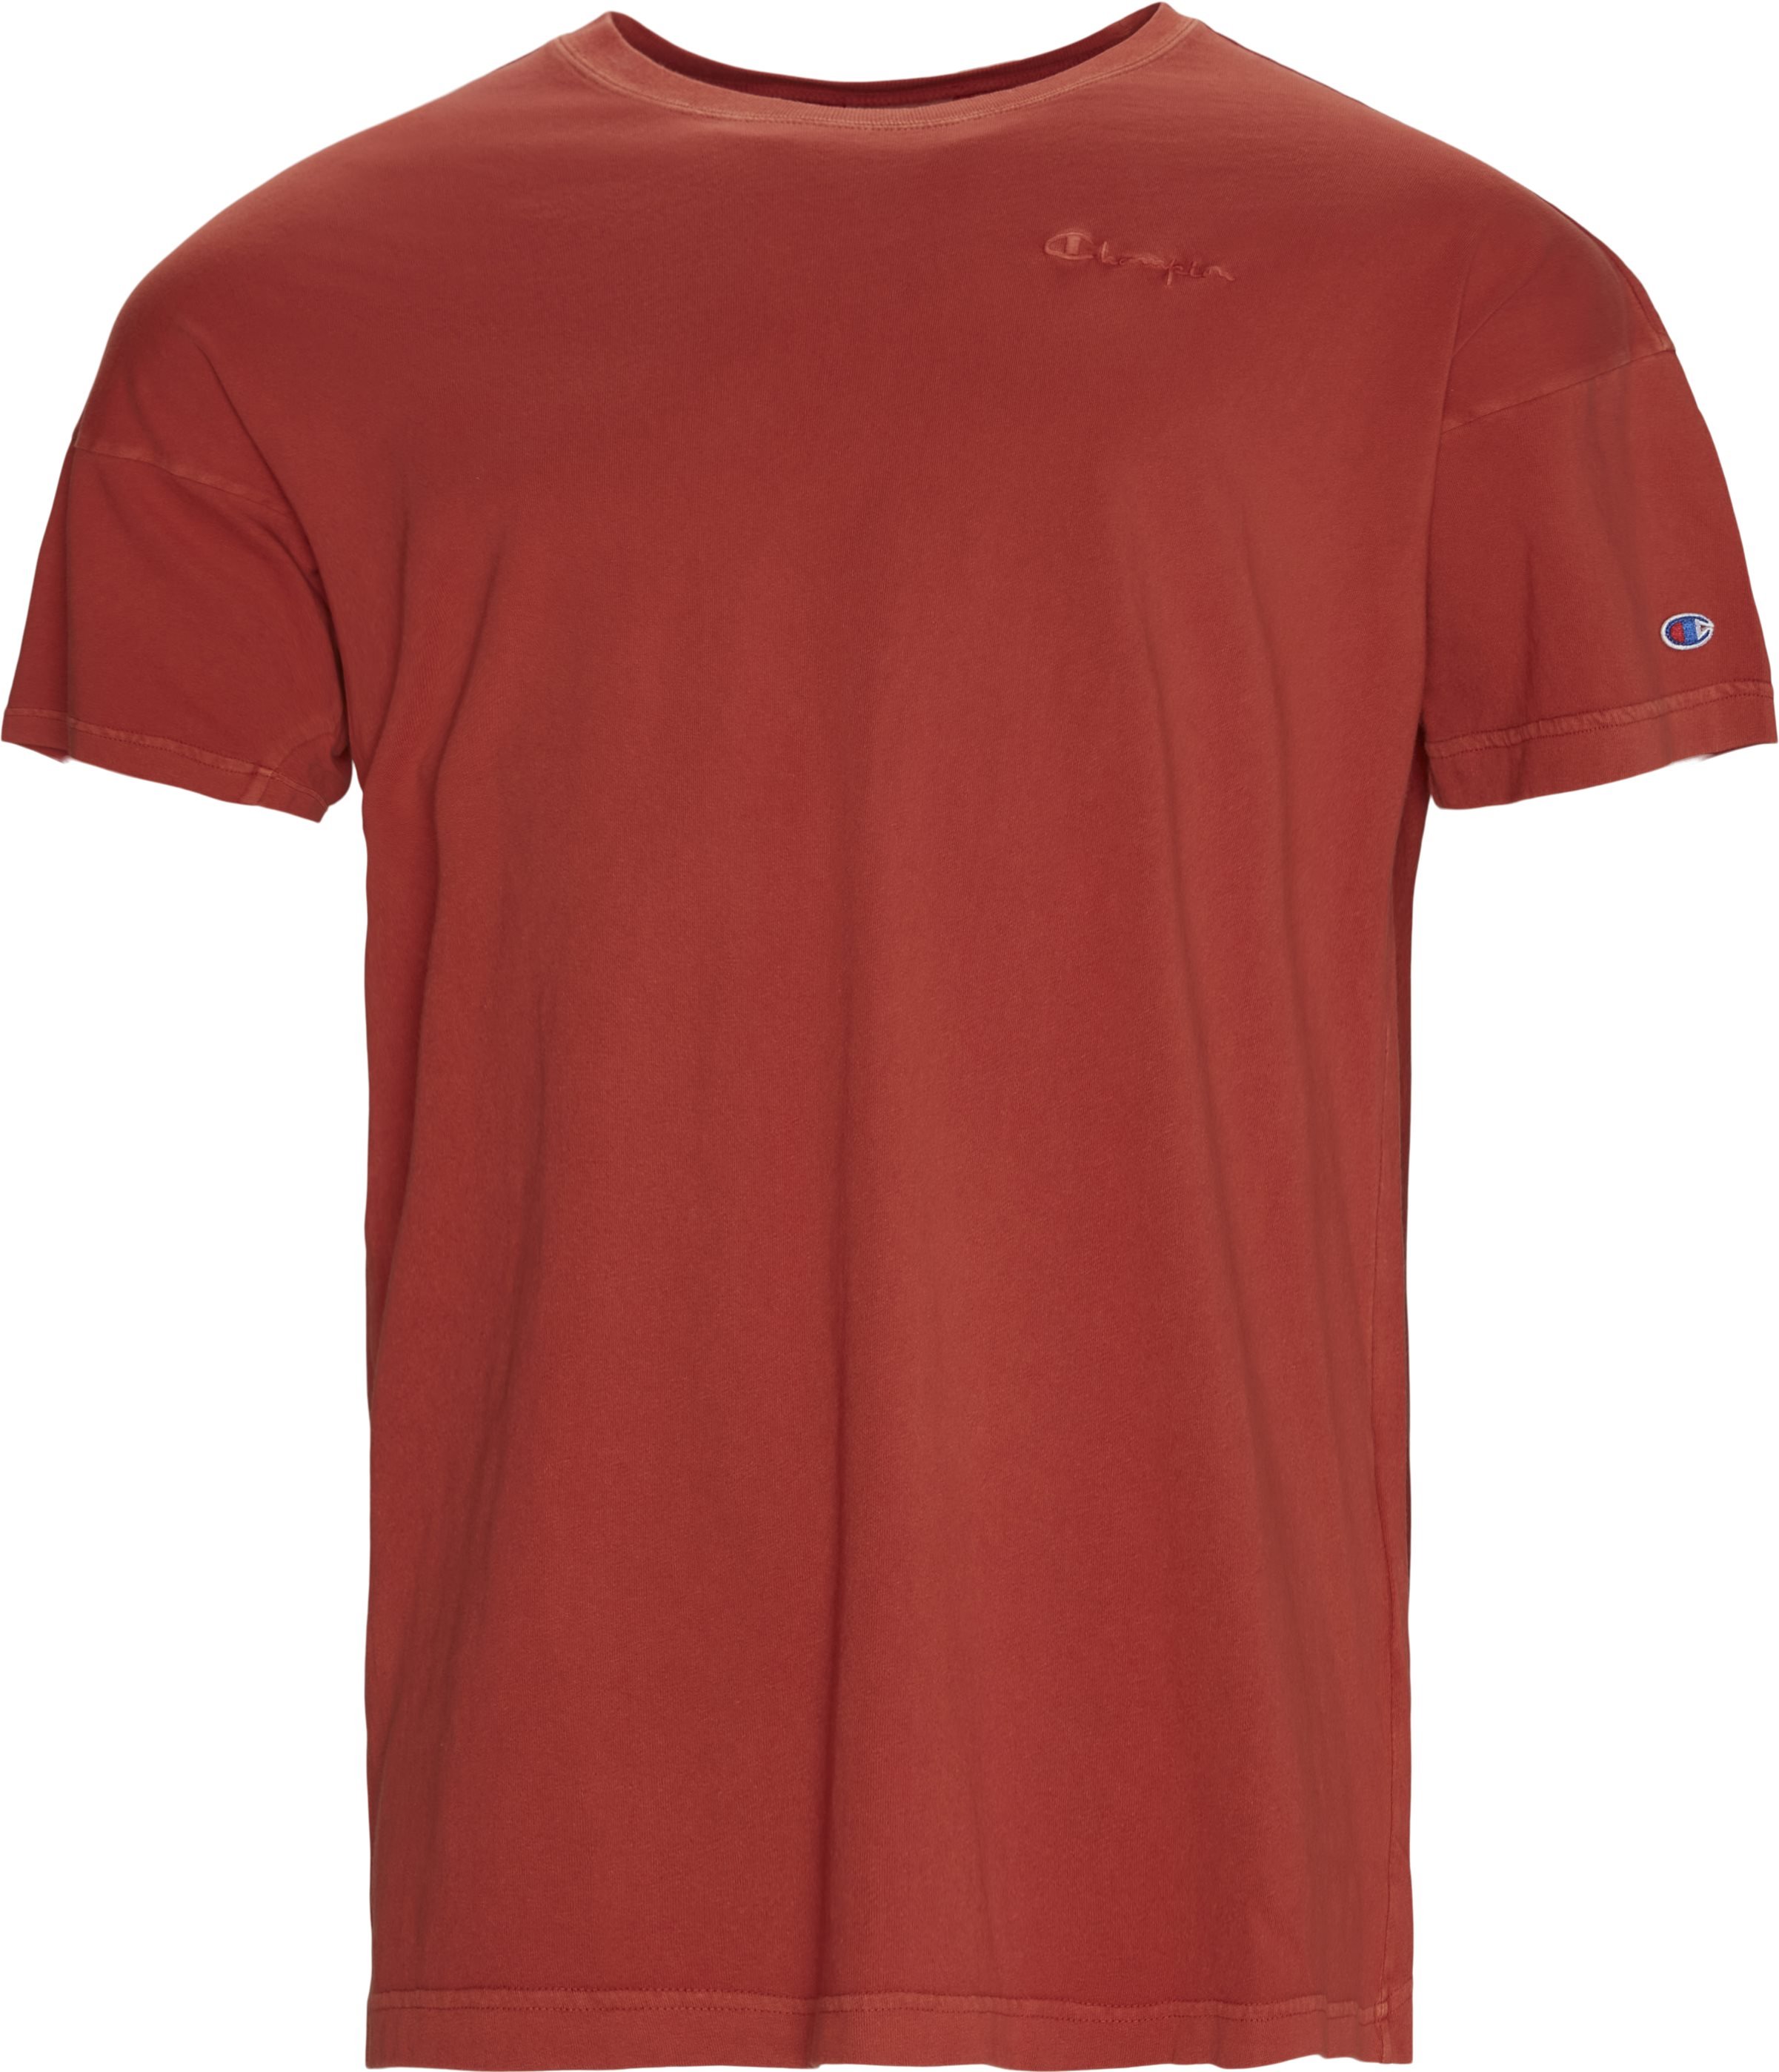 G D Tee - T-shirts - Regular fit - Rød